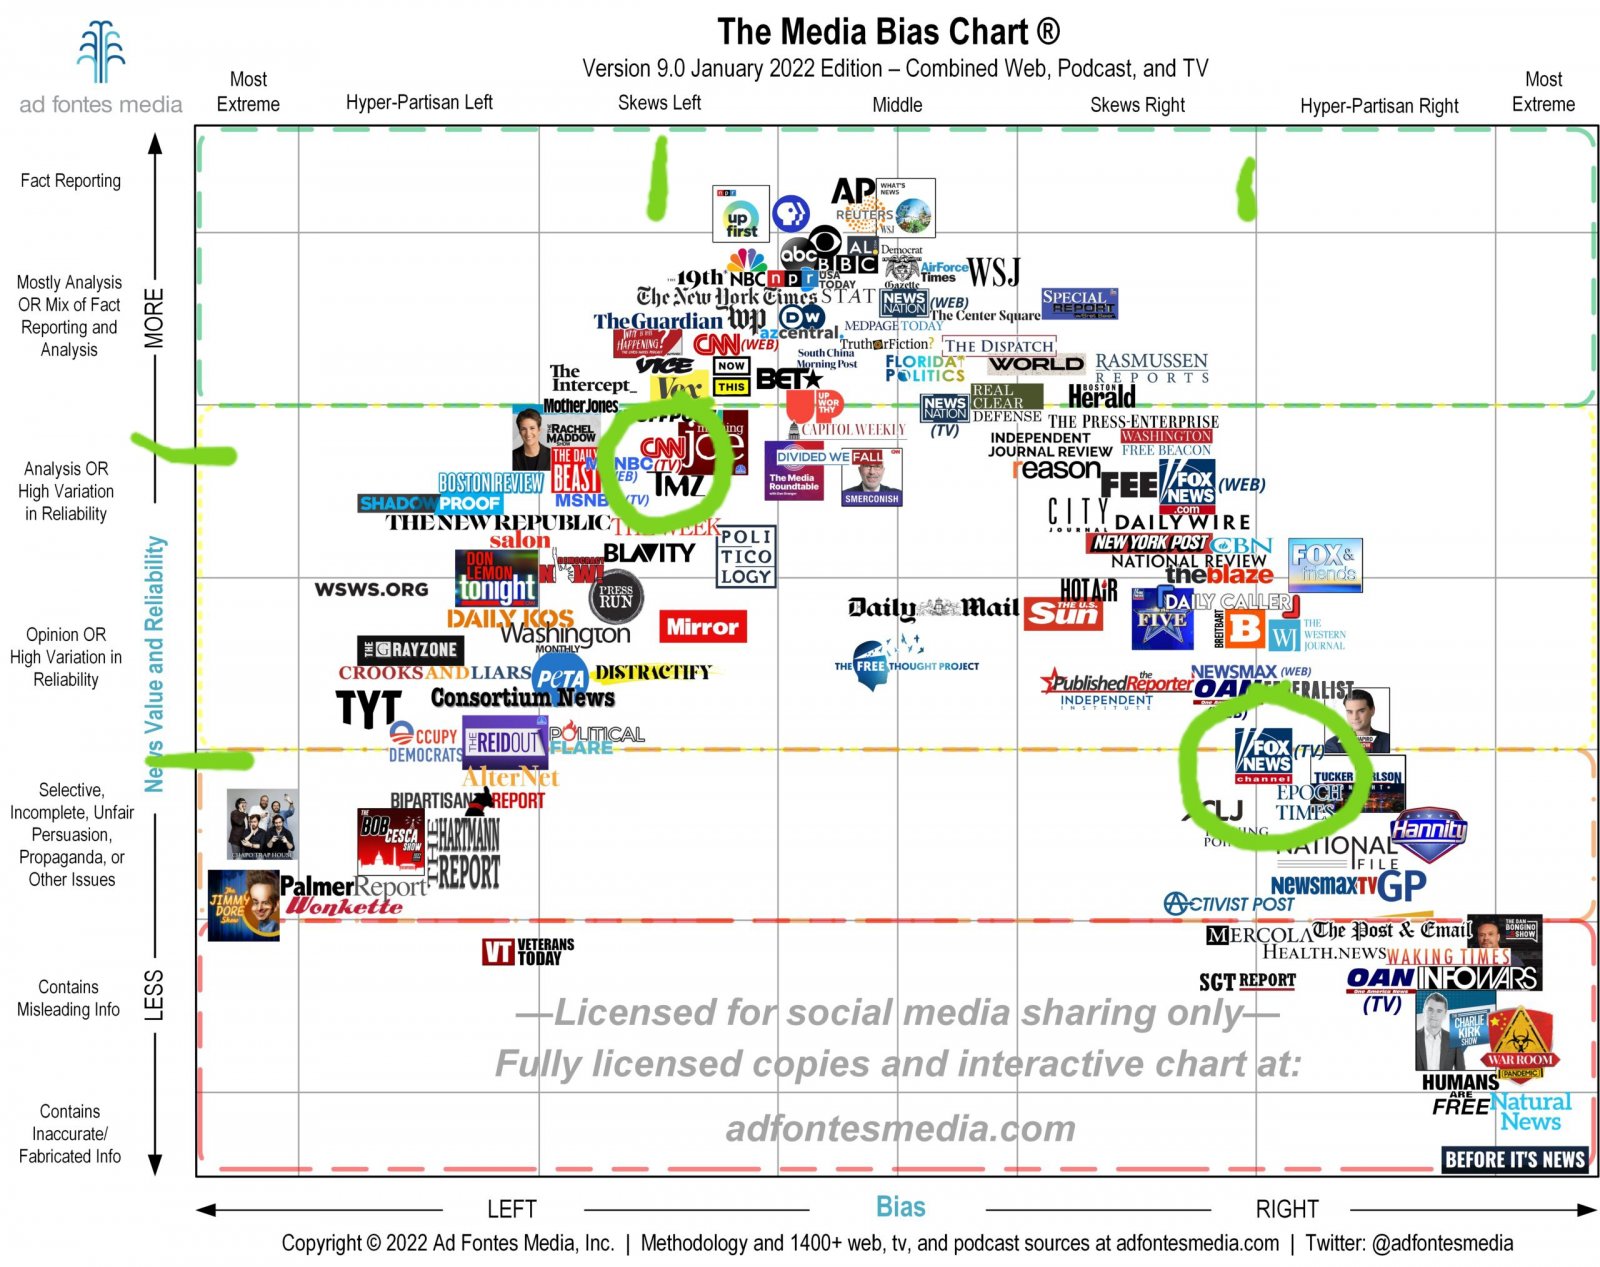 Media-Bias-Chart-9.0_Jan-2022-Unlicensed-Social-Media_Hi_Res-scaled.jpg